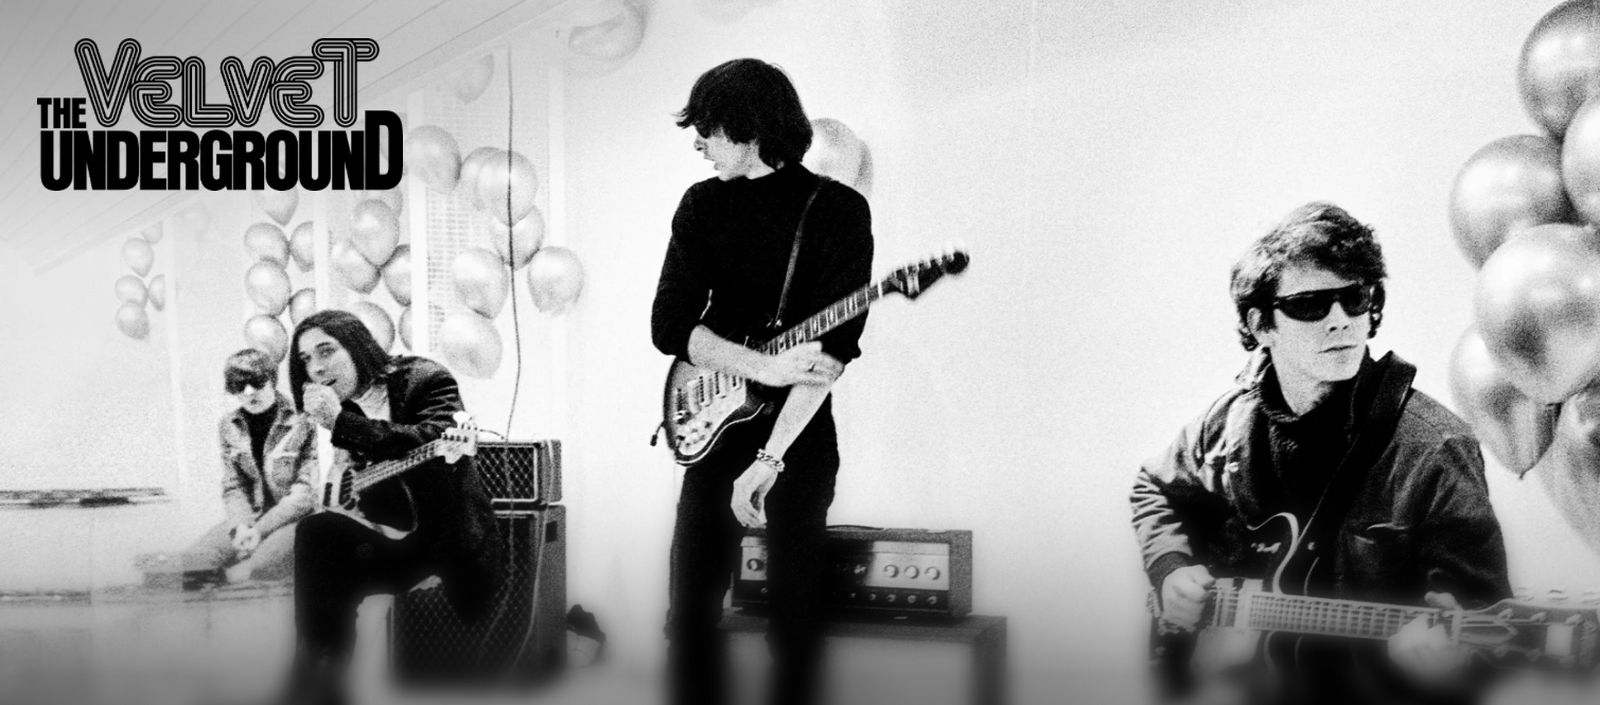 Apple TV+ Shares 'The Velvet Underground' Trailer Ahead of October 15 Premiere